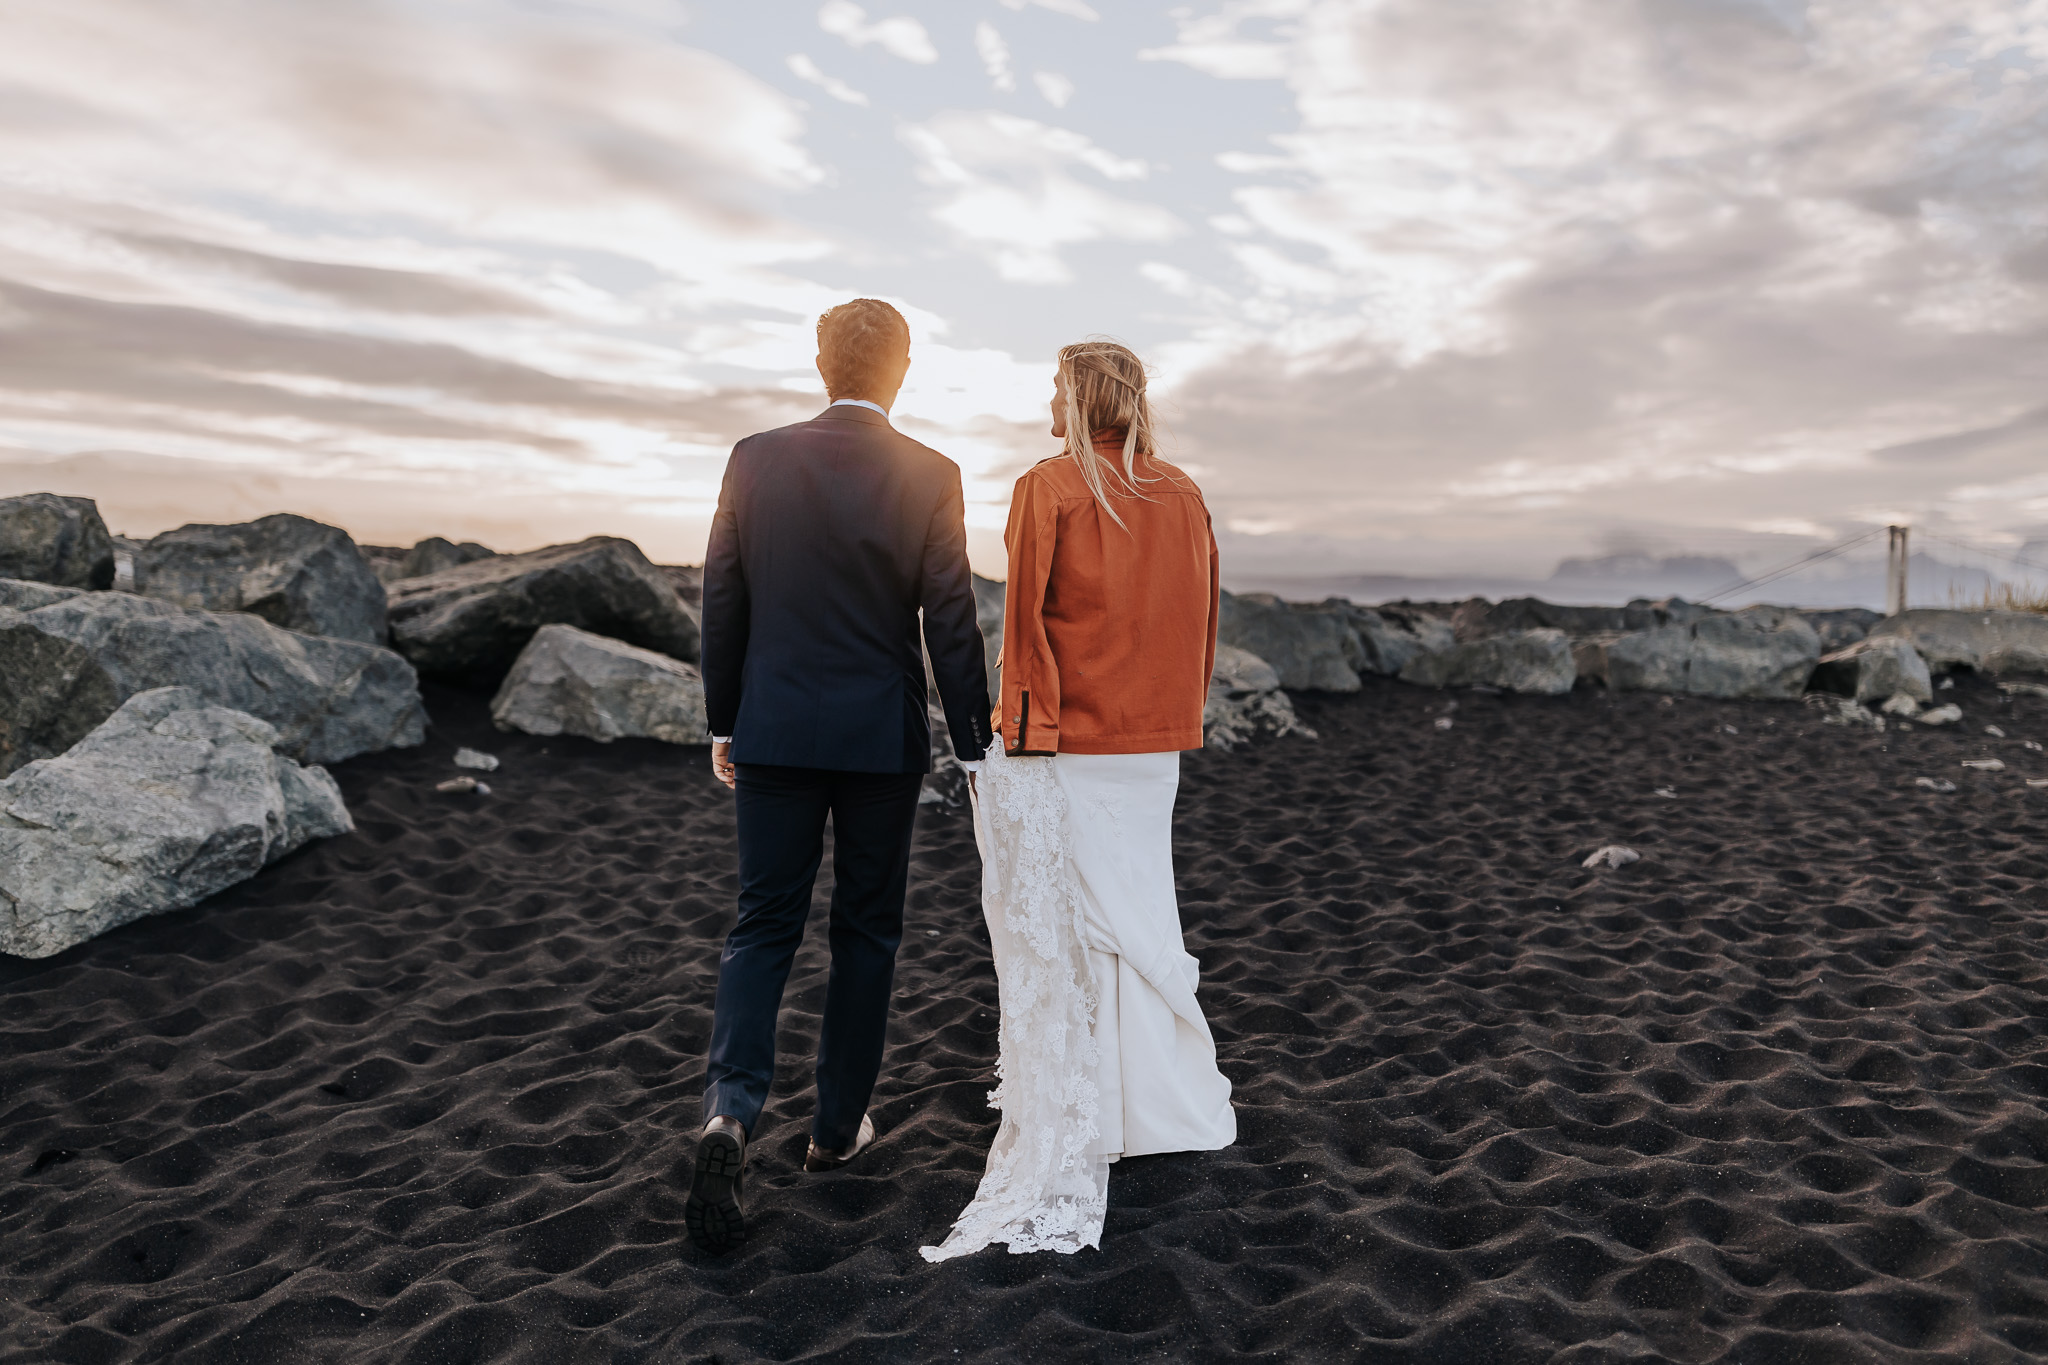 Destination elopement photographer captures couple walking into sunset during outdoor bridal portraits